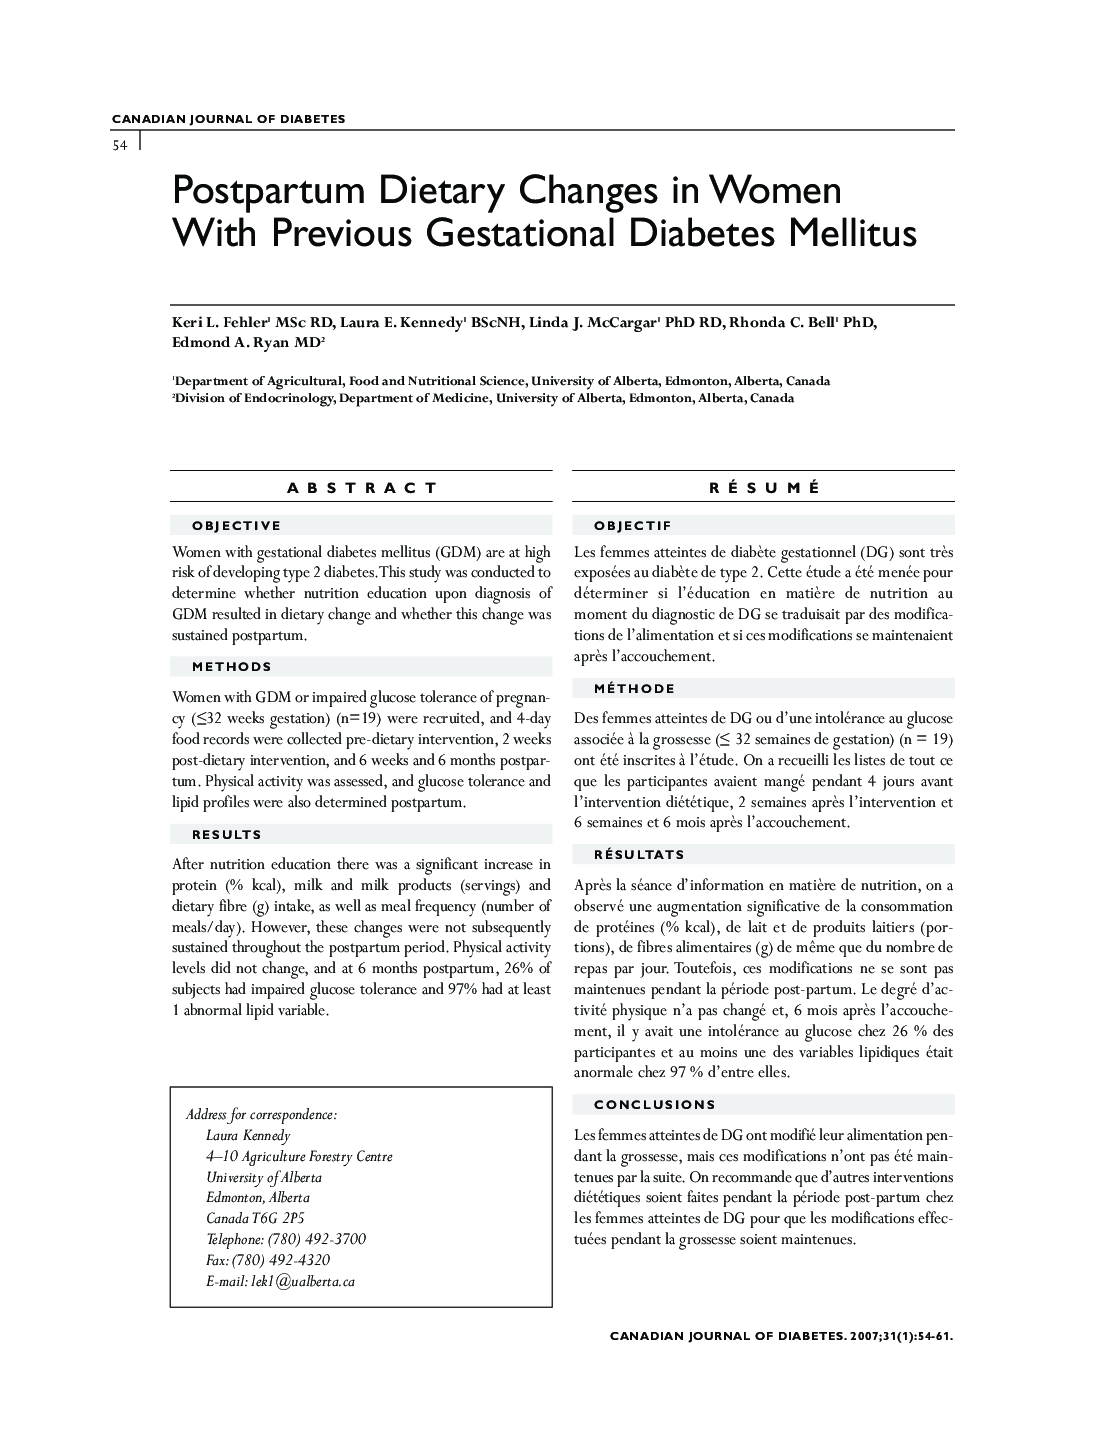 Postpartum Dietary Changes in Women With Previous Gestational Diabetes Mellitus